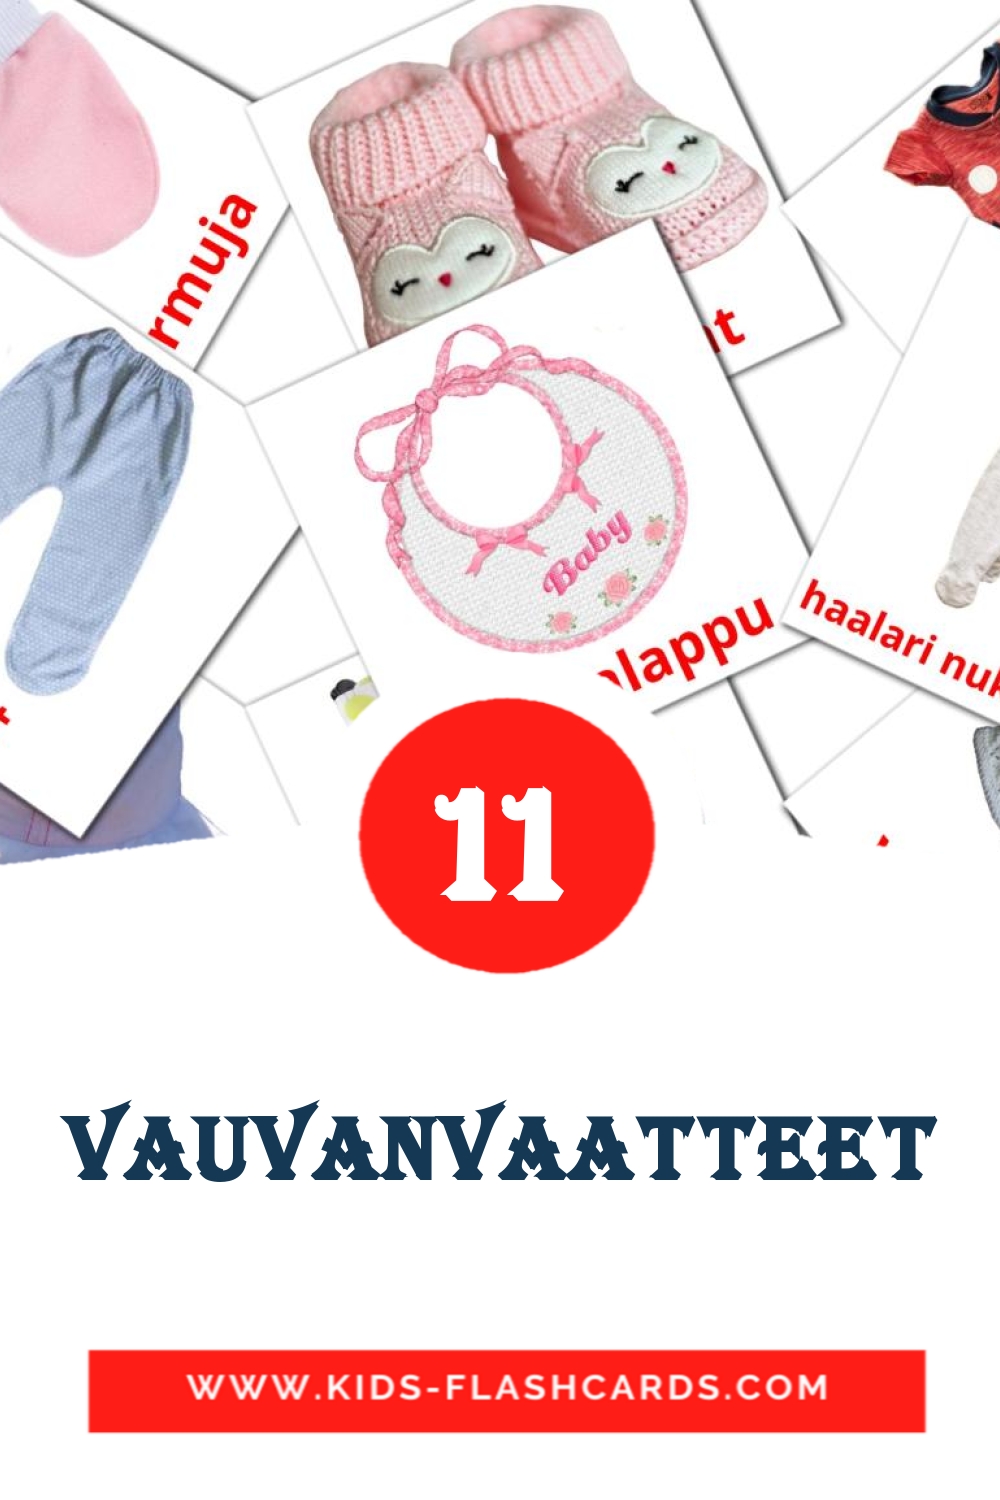 vauvanvaatteet на финском для Детского Сада (11 карточек)